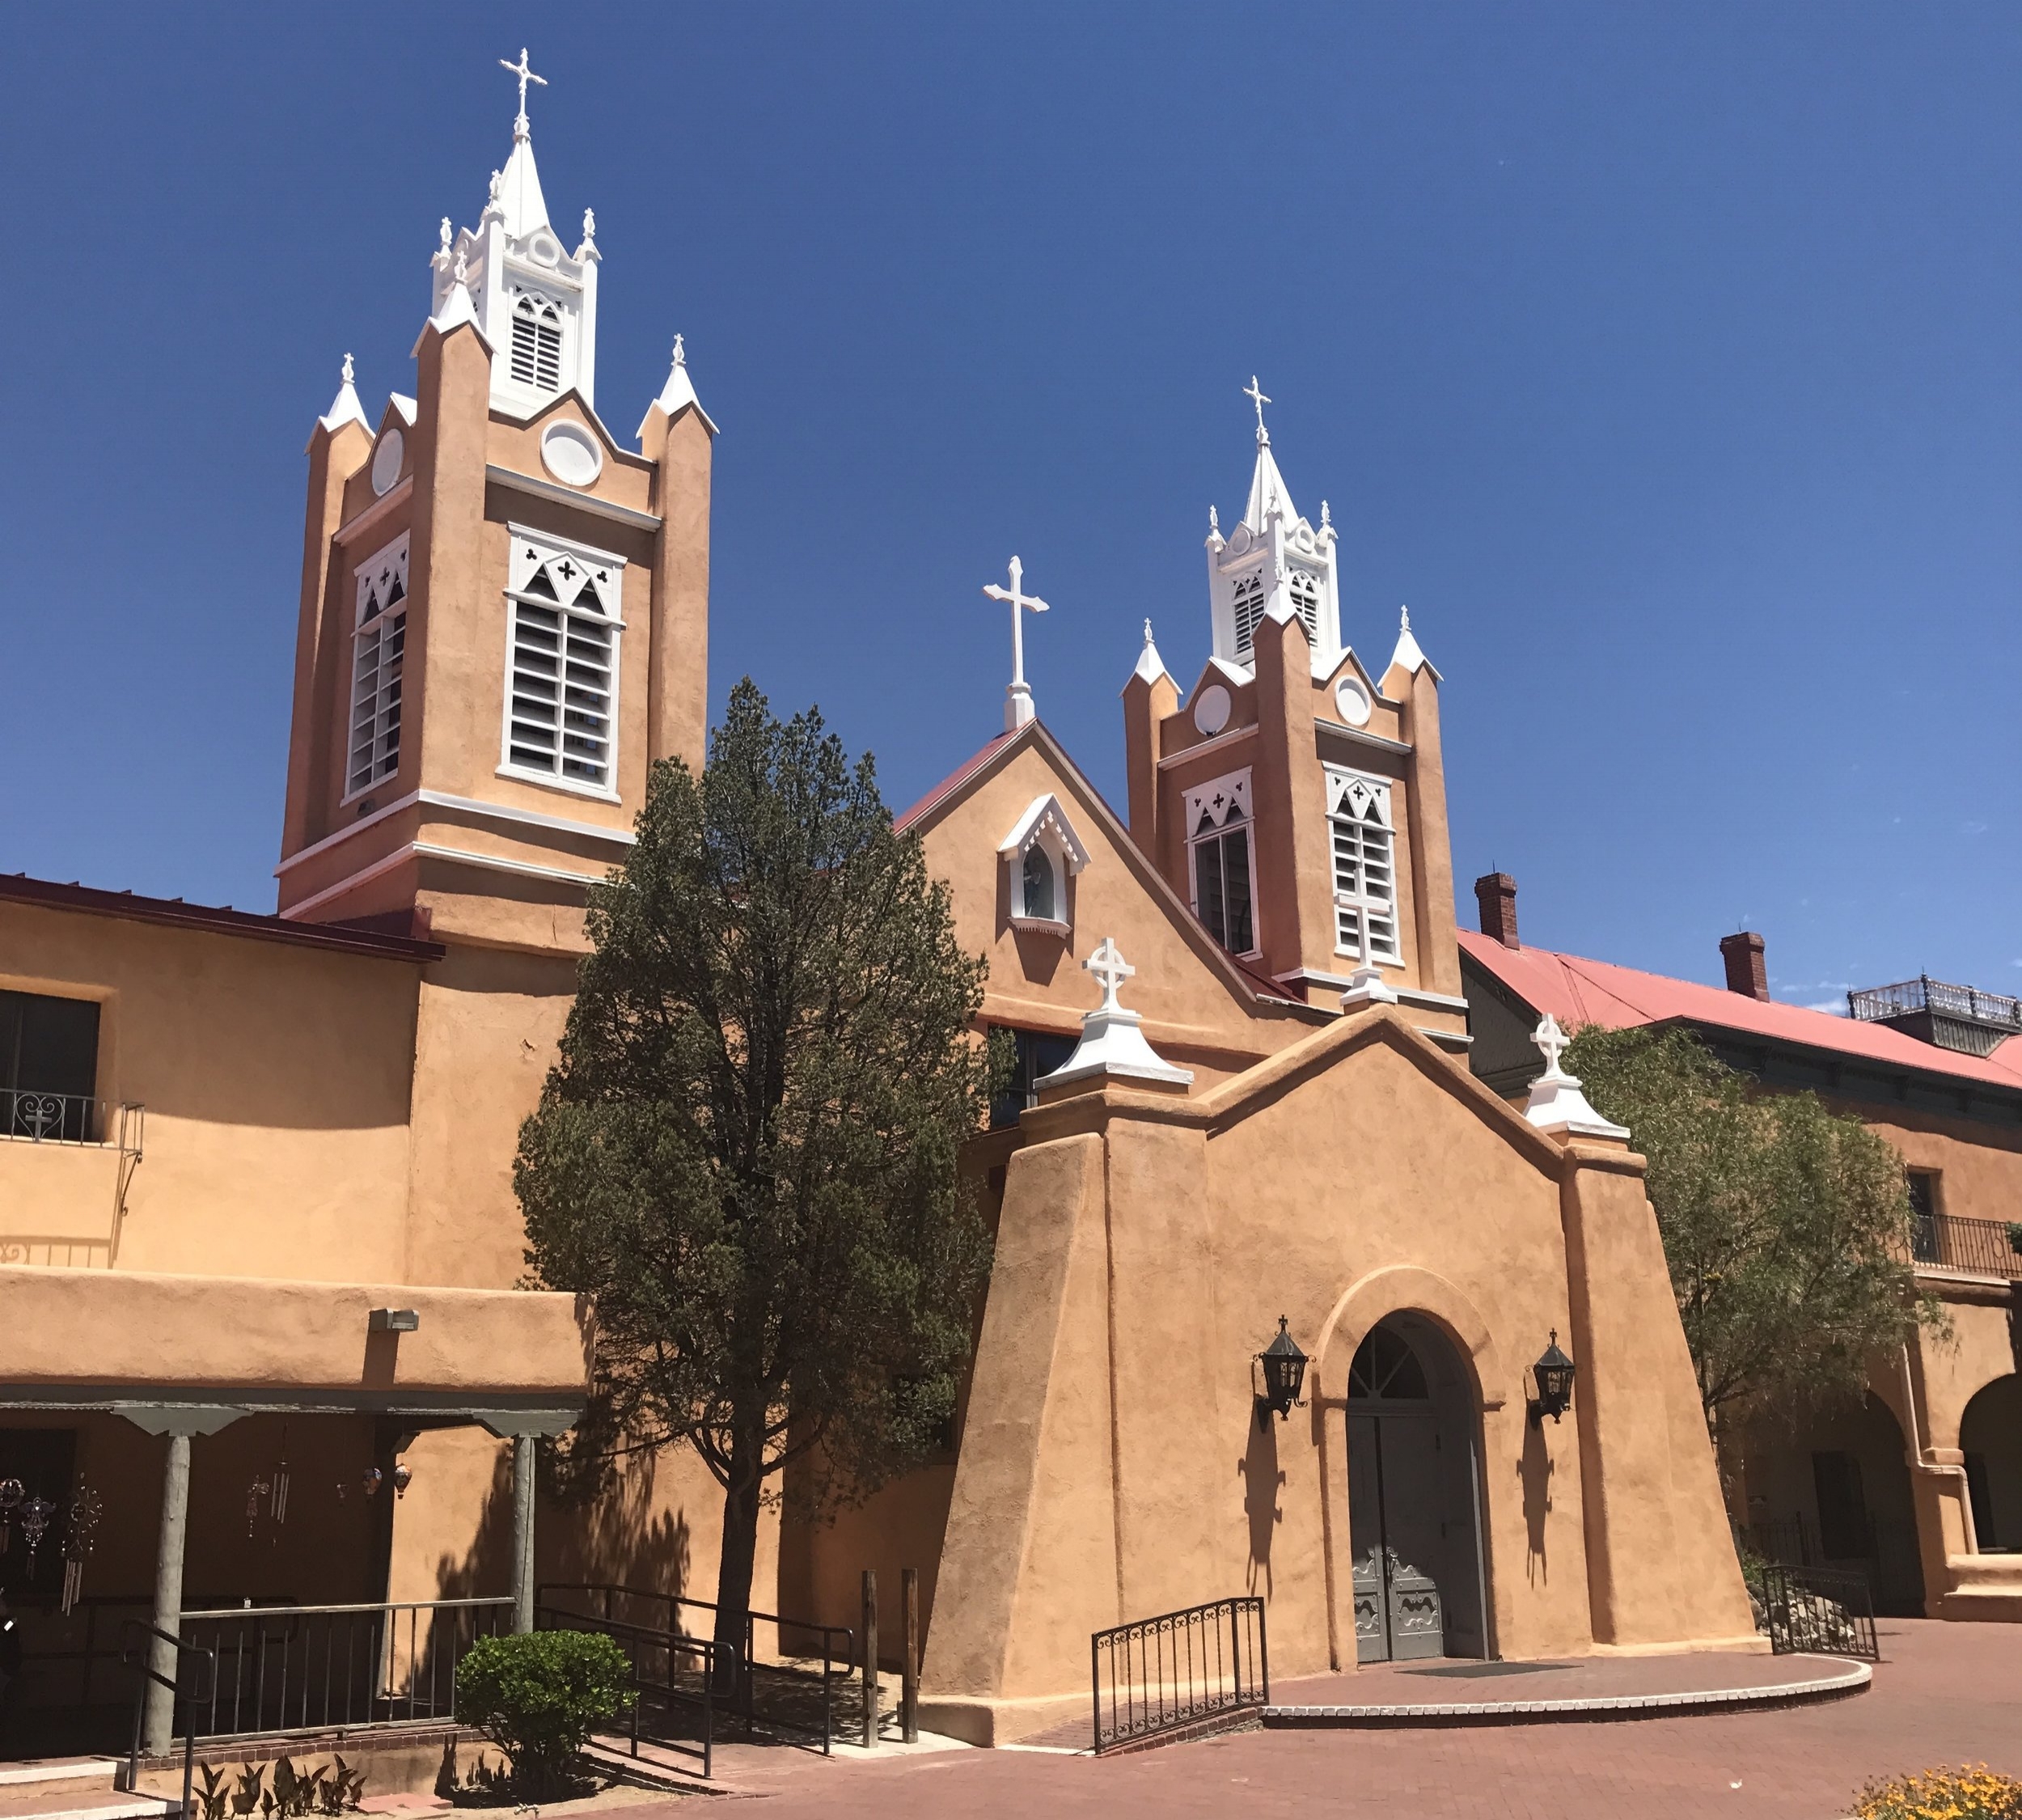 St. Phillip Neri Church in Old Town Albuquerque